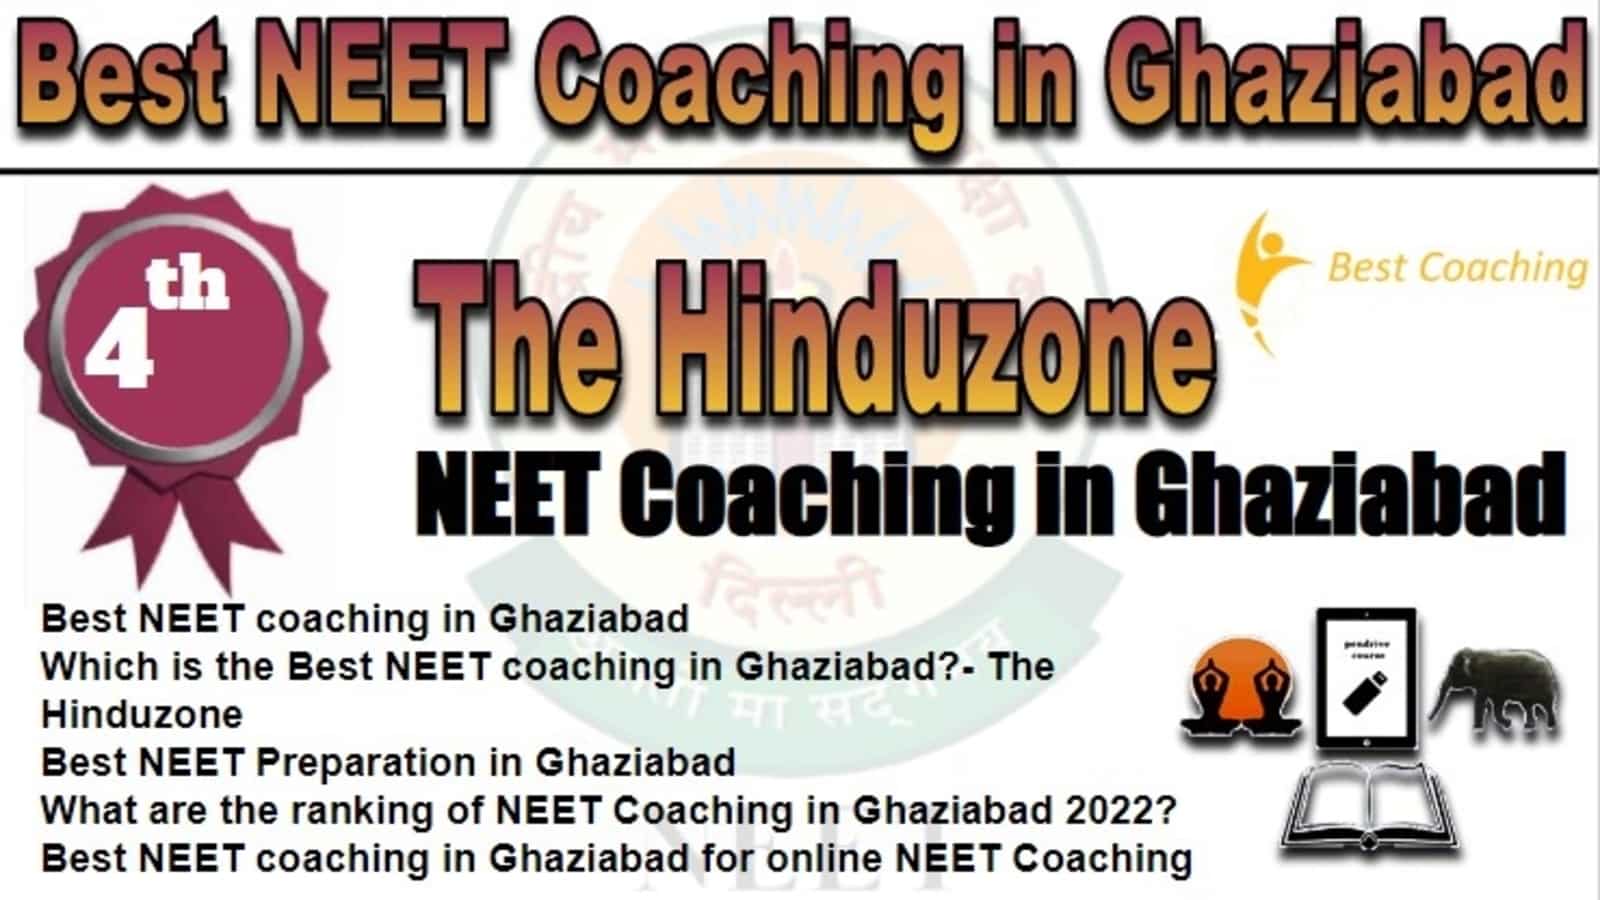 Rank 4 Best NEET Coaching in Ghaziabad